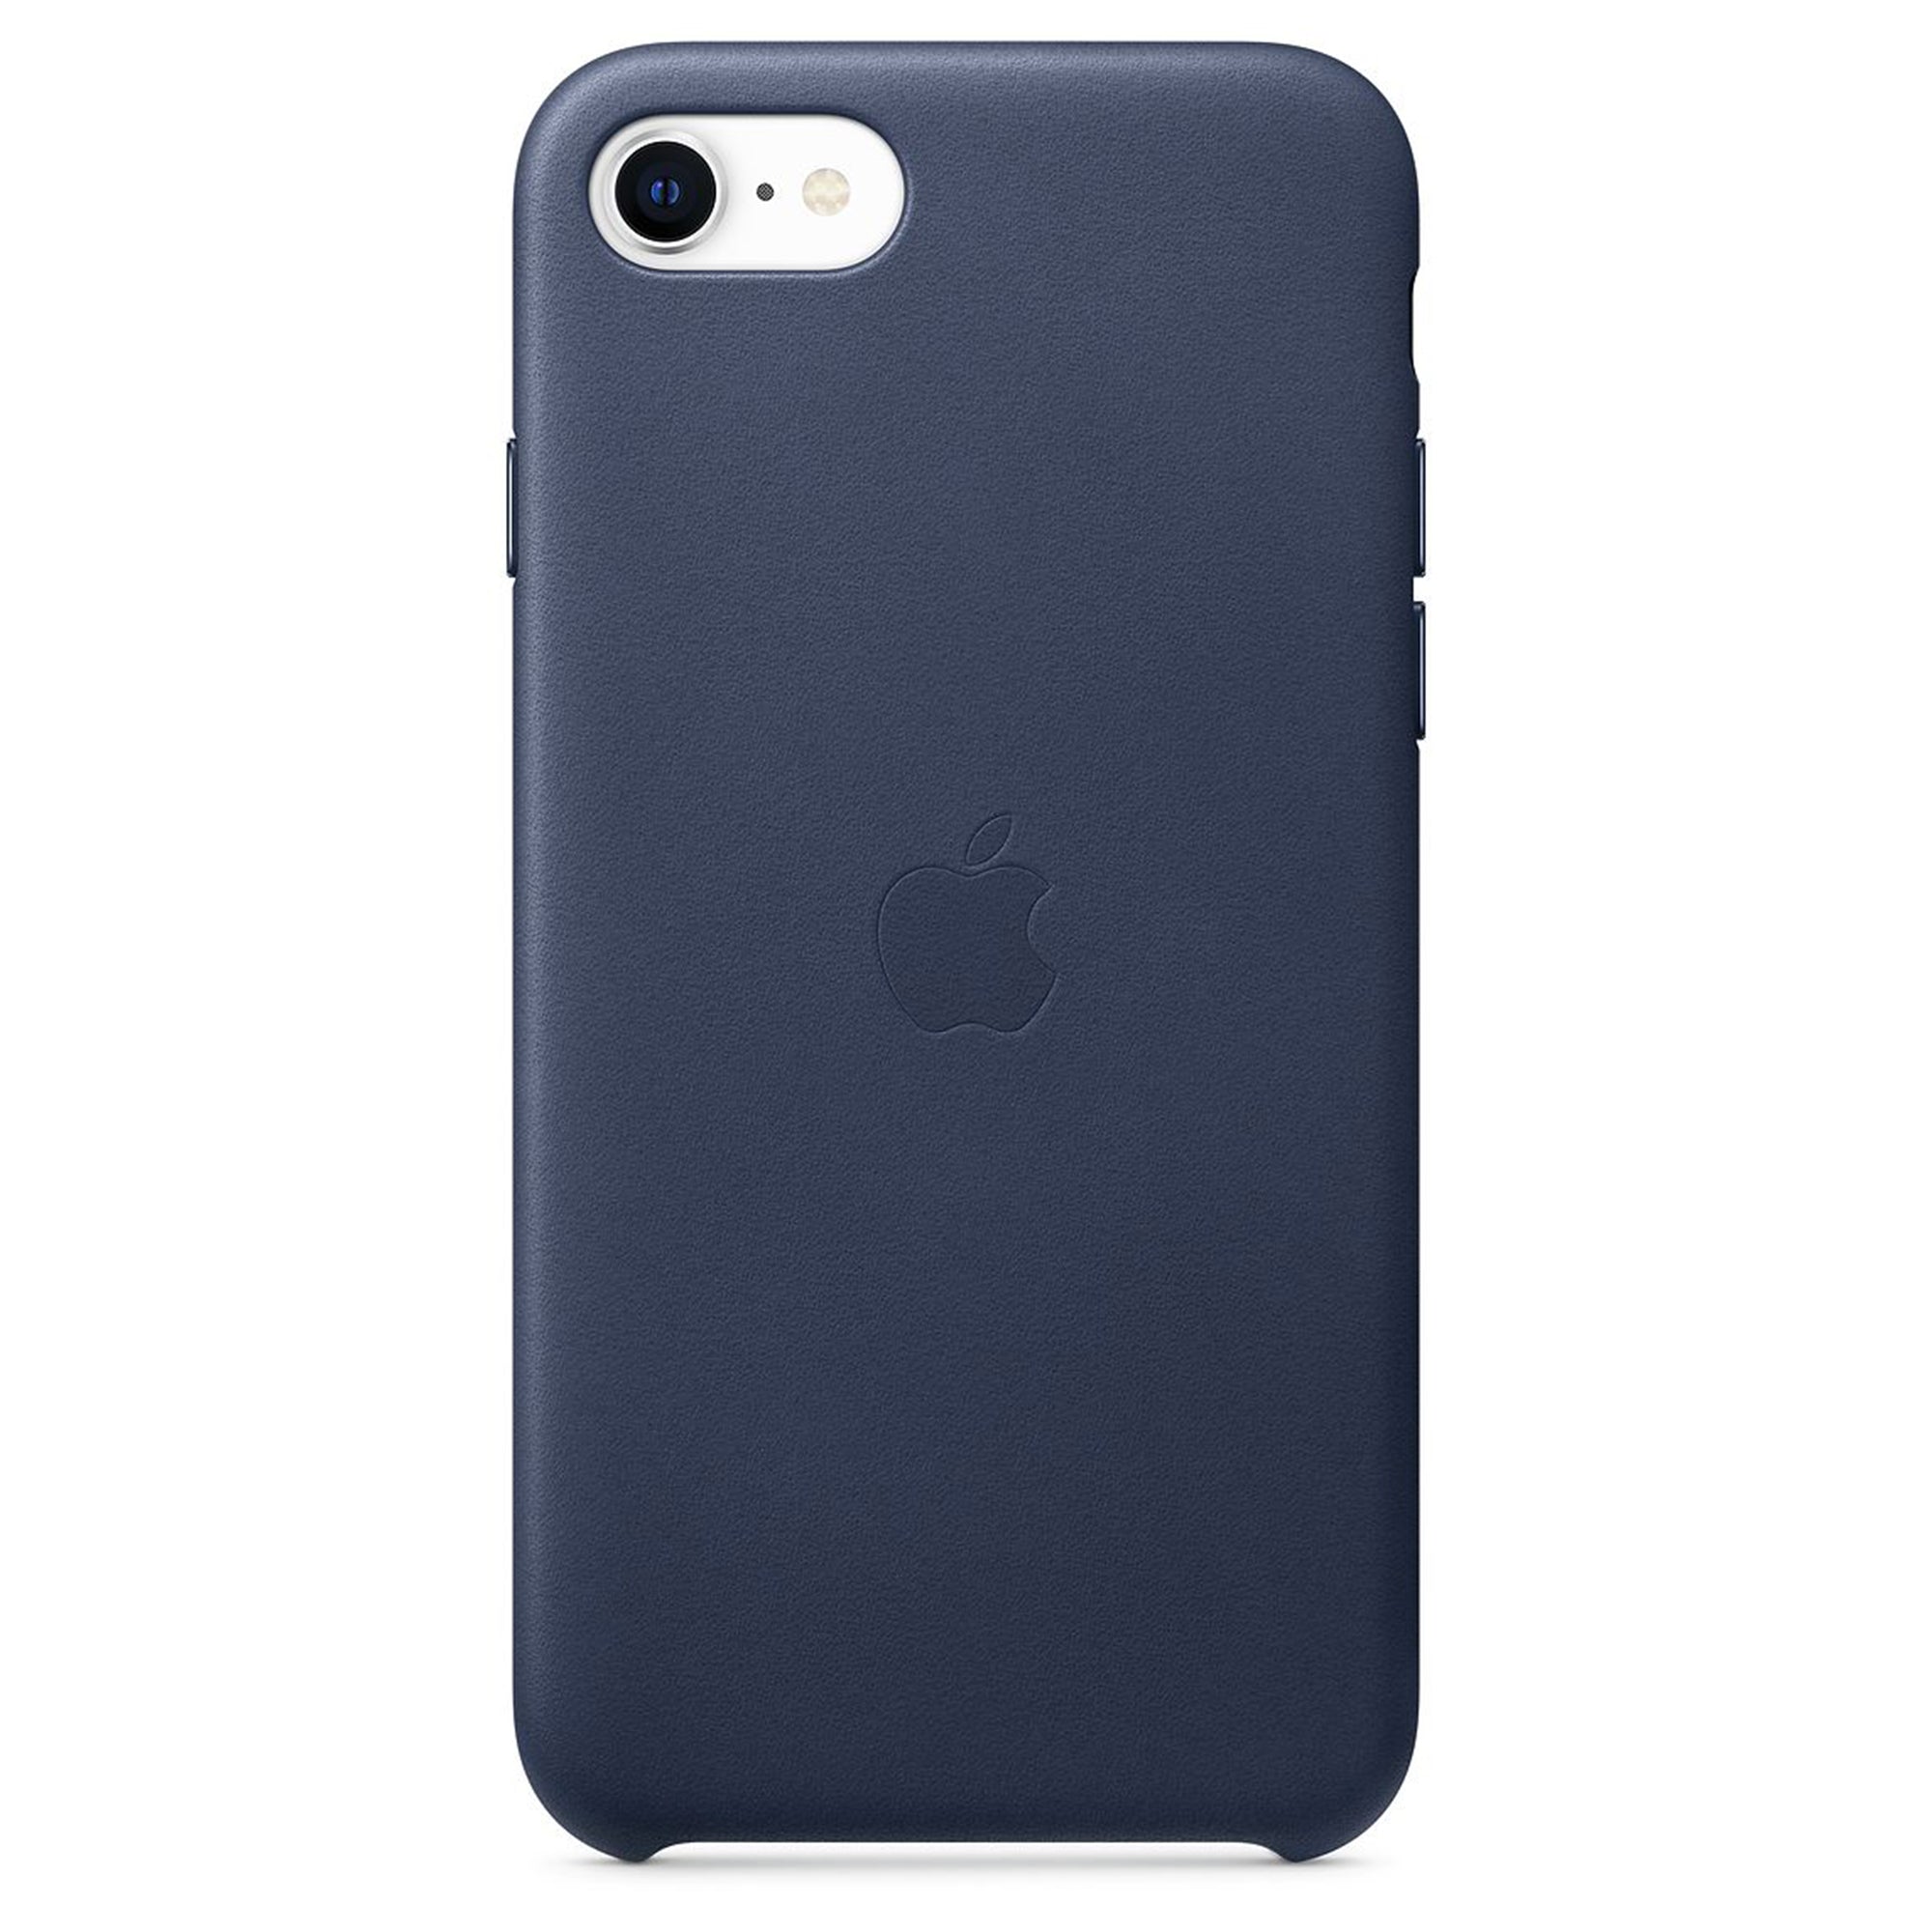 iPhone SE Leather Case